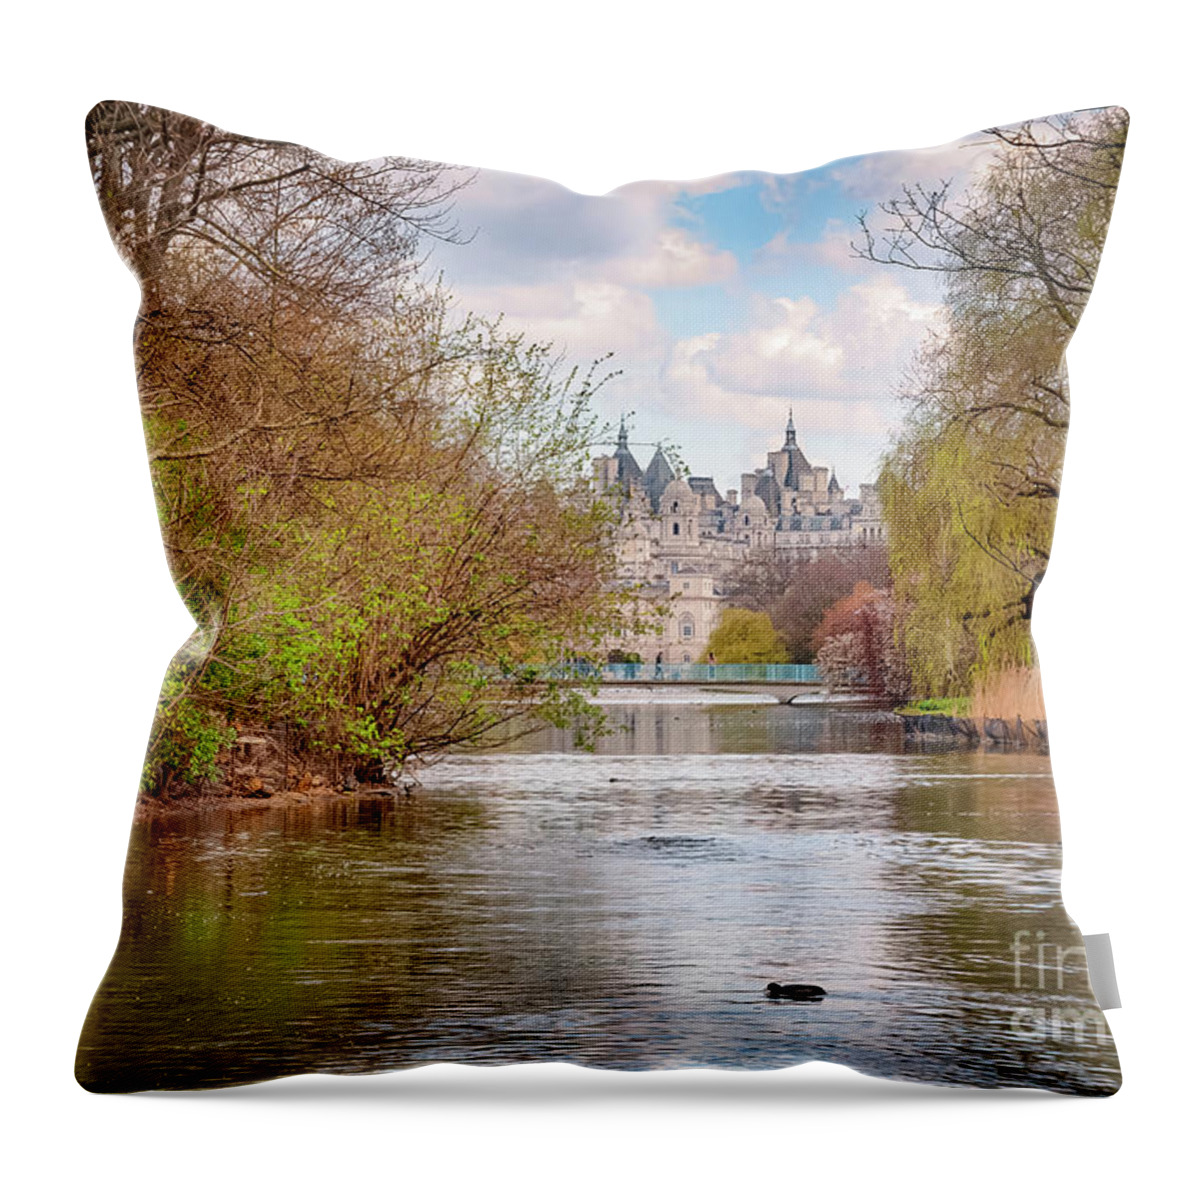 City Throw Pillow featuring the photograph St James Park #2 by Mariusz Talarek